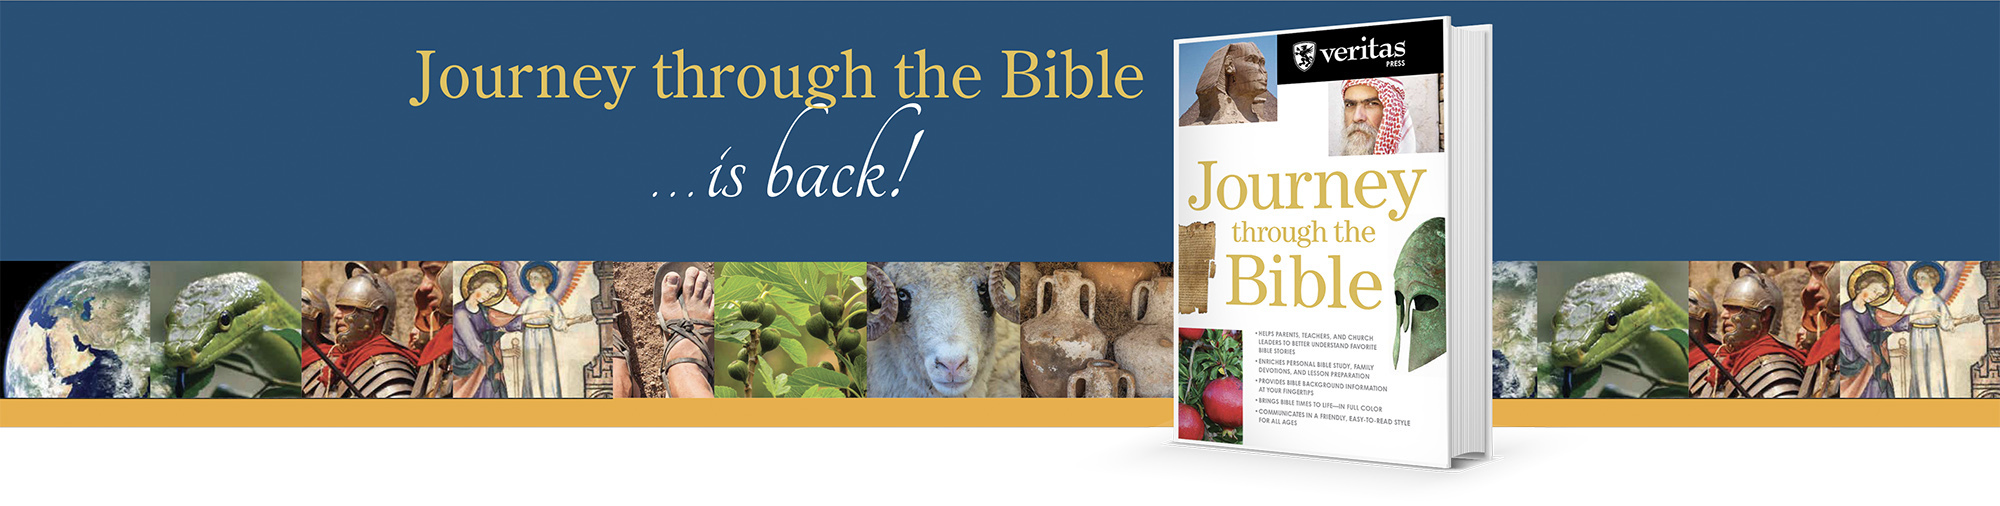 bible-journey-banner.jpg